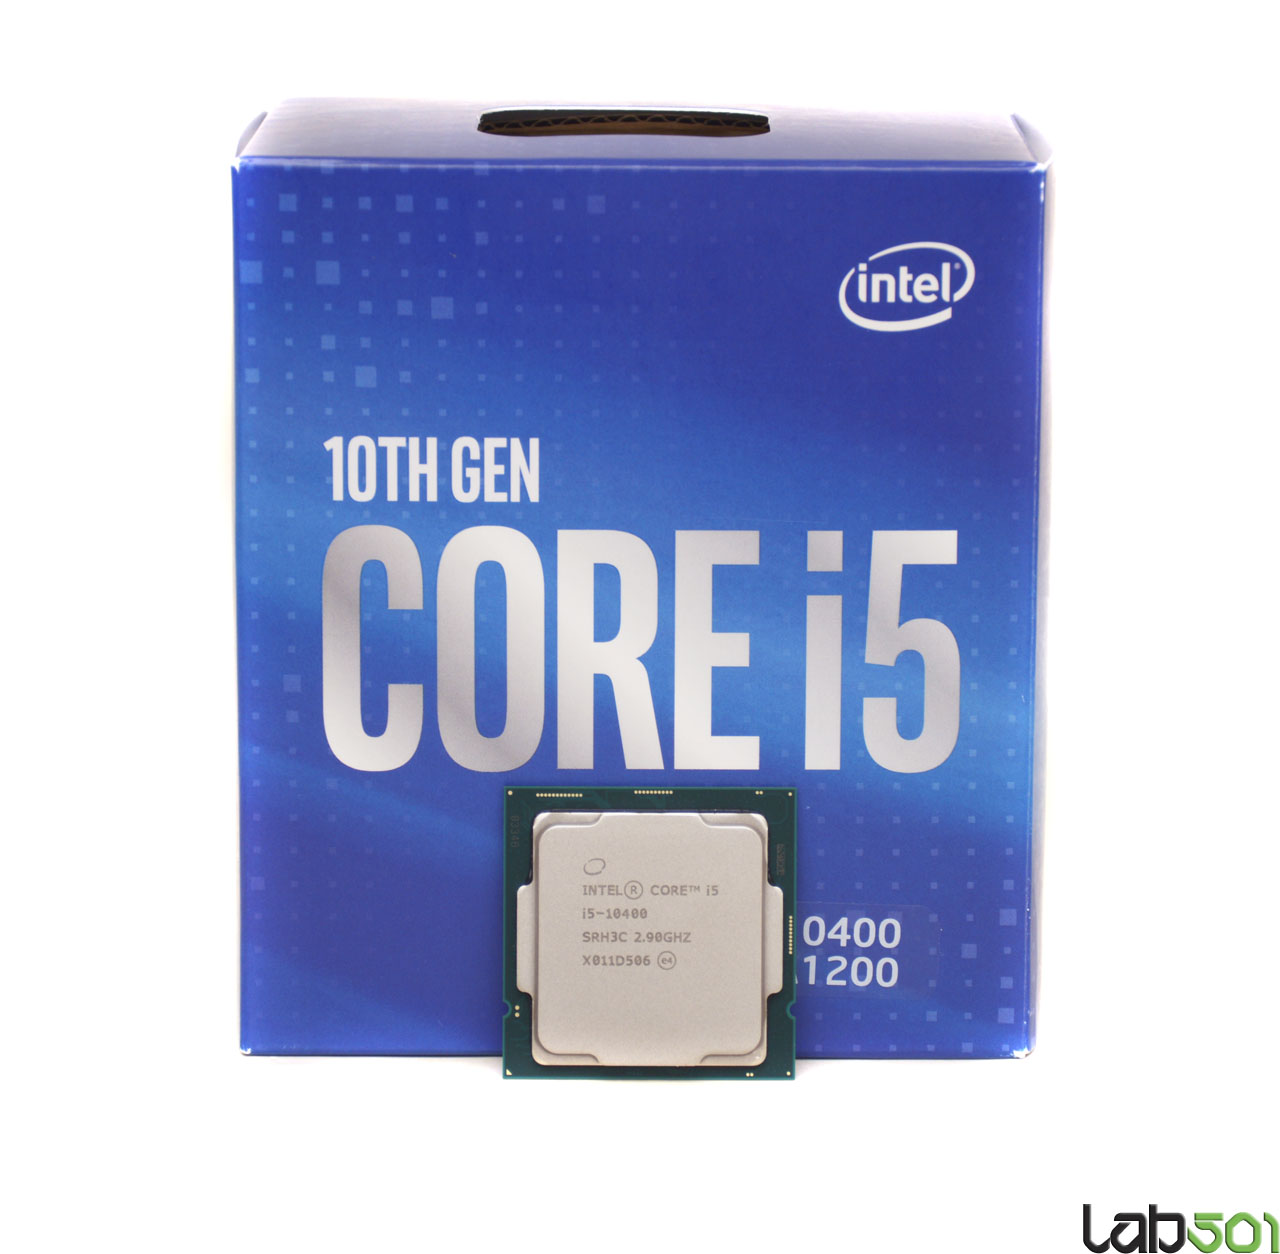 Intel core i5 10400f 2.9 ггц. Процессор Intel Core i5-10400f OEM. Процессор Intel Core i5-10400f Box. Intel i5 10400. Intel Core i5-10400 Box.